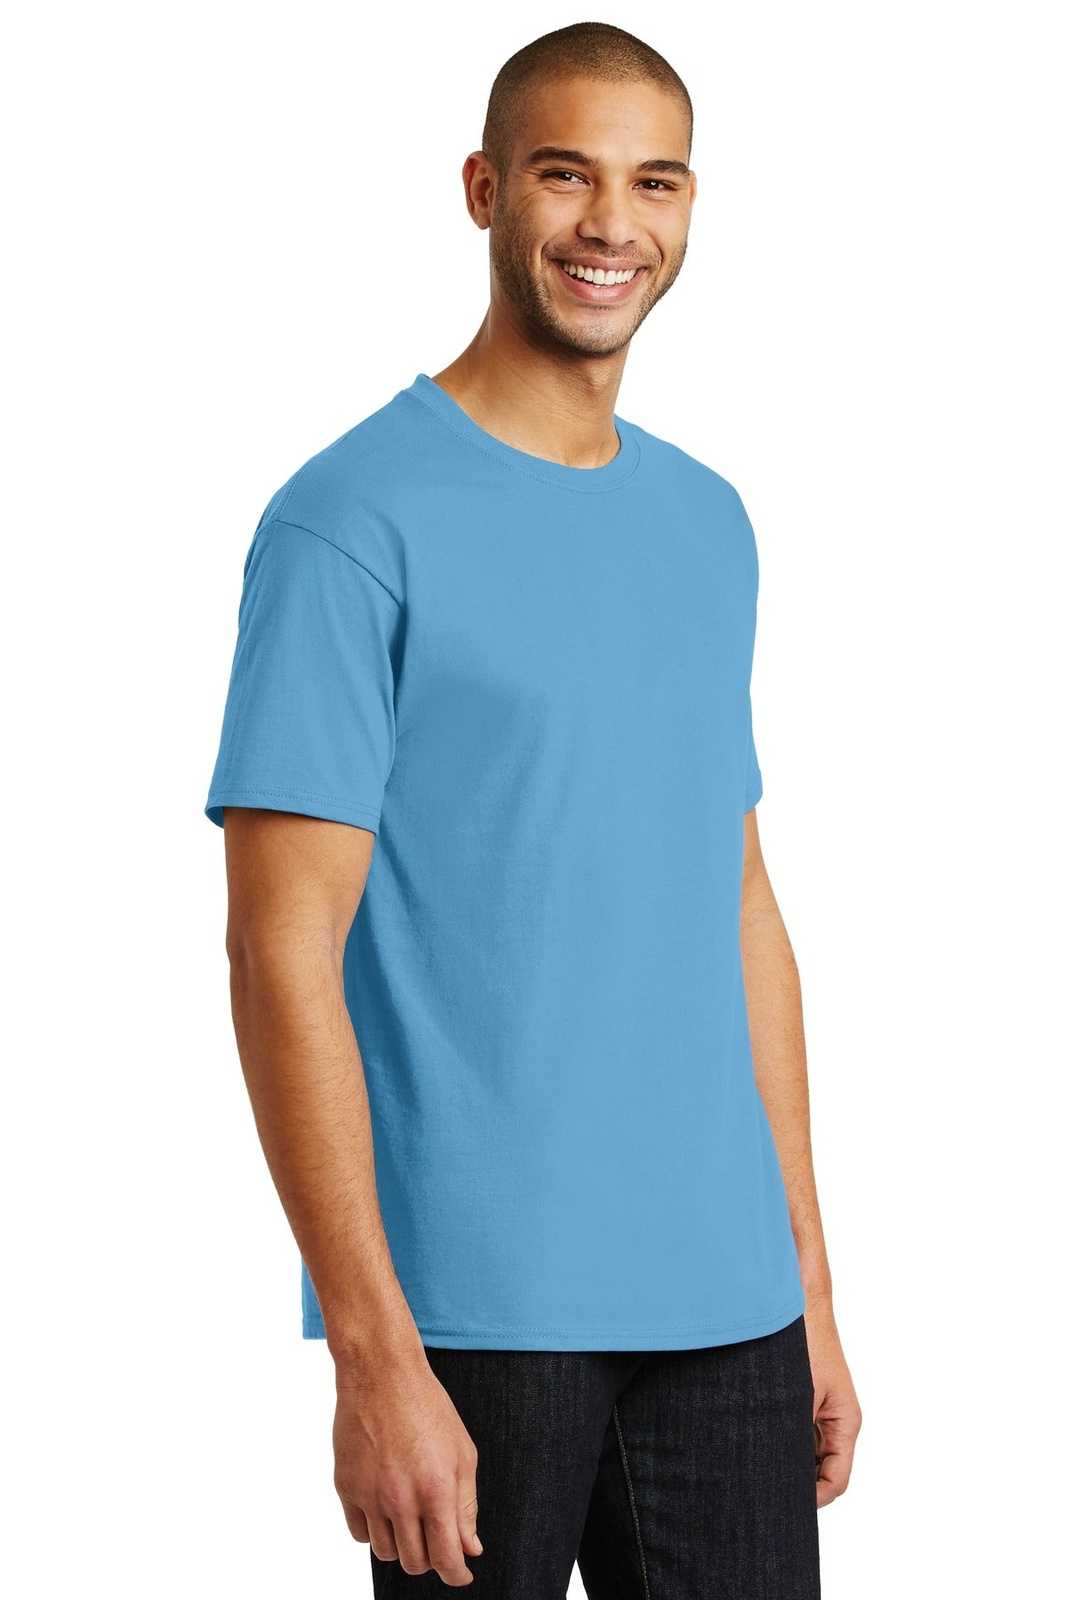 Hanes 5250 Tagless 100% Cotton T-Shirt - Aquatic Blue - HIT a Double